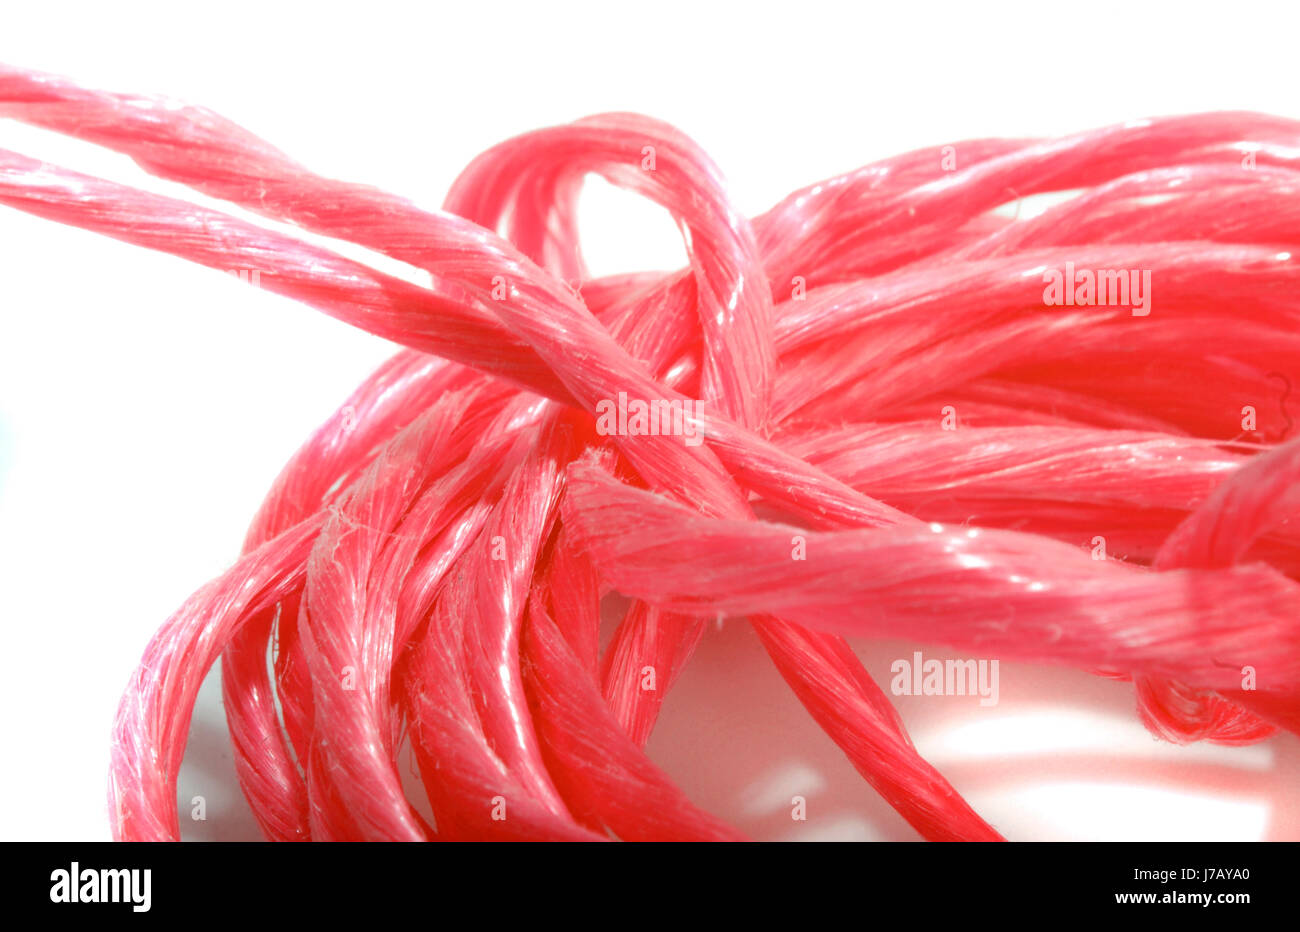 Rocío hogar cable desenrollado cuerda roja cadena de hilo azul cerca de macro macro Foto de stock